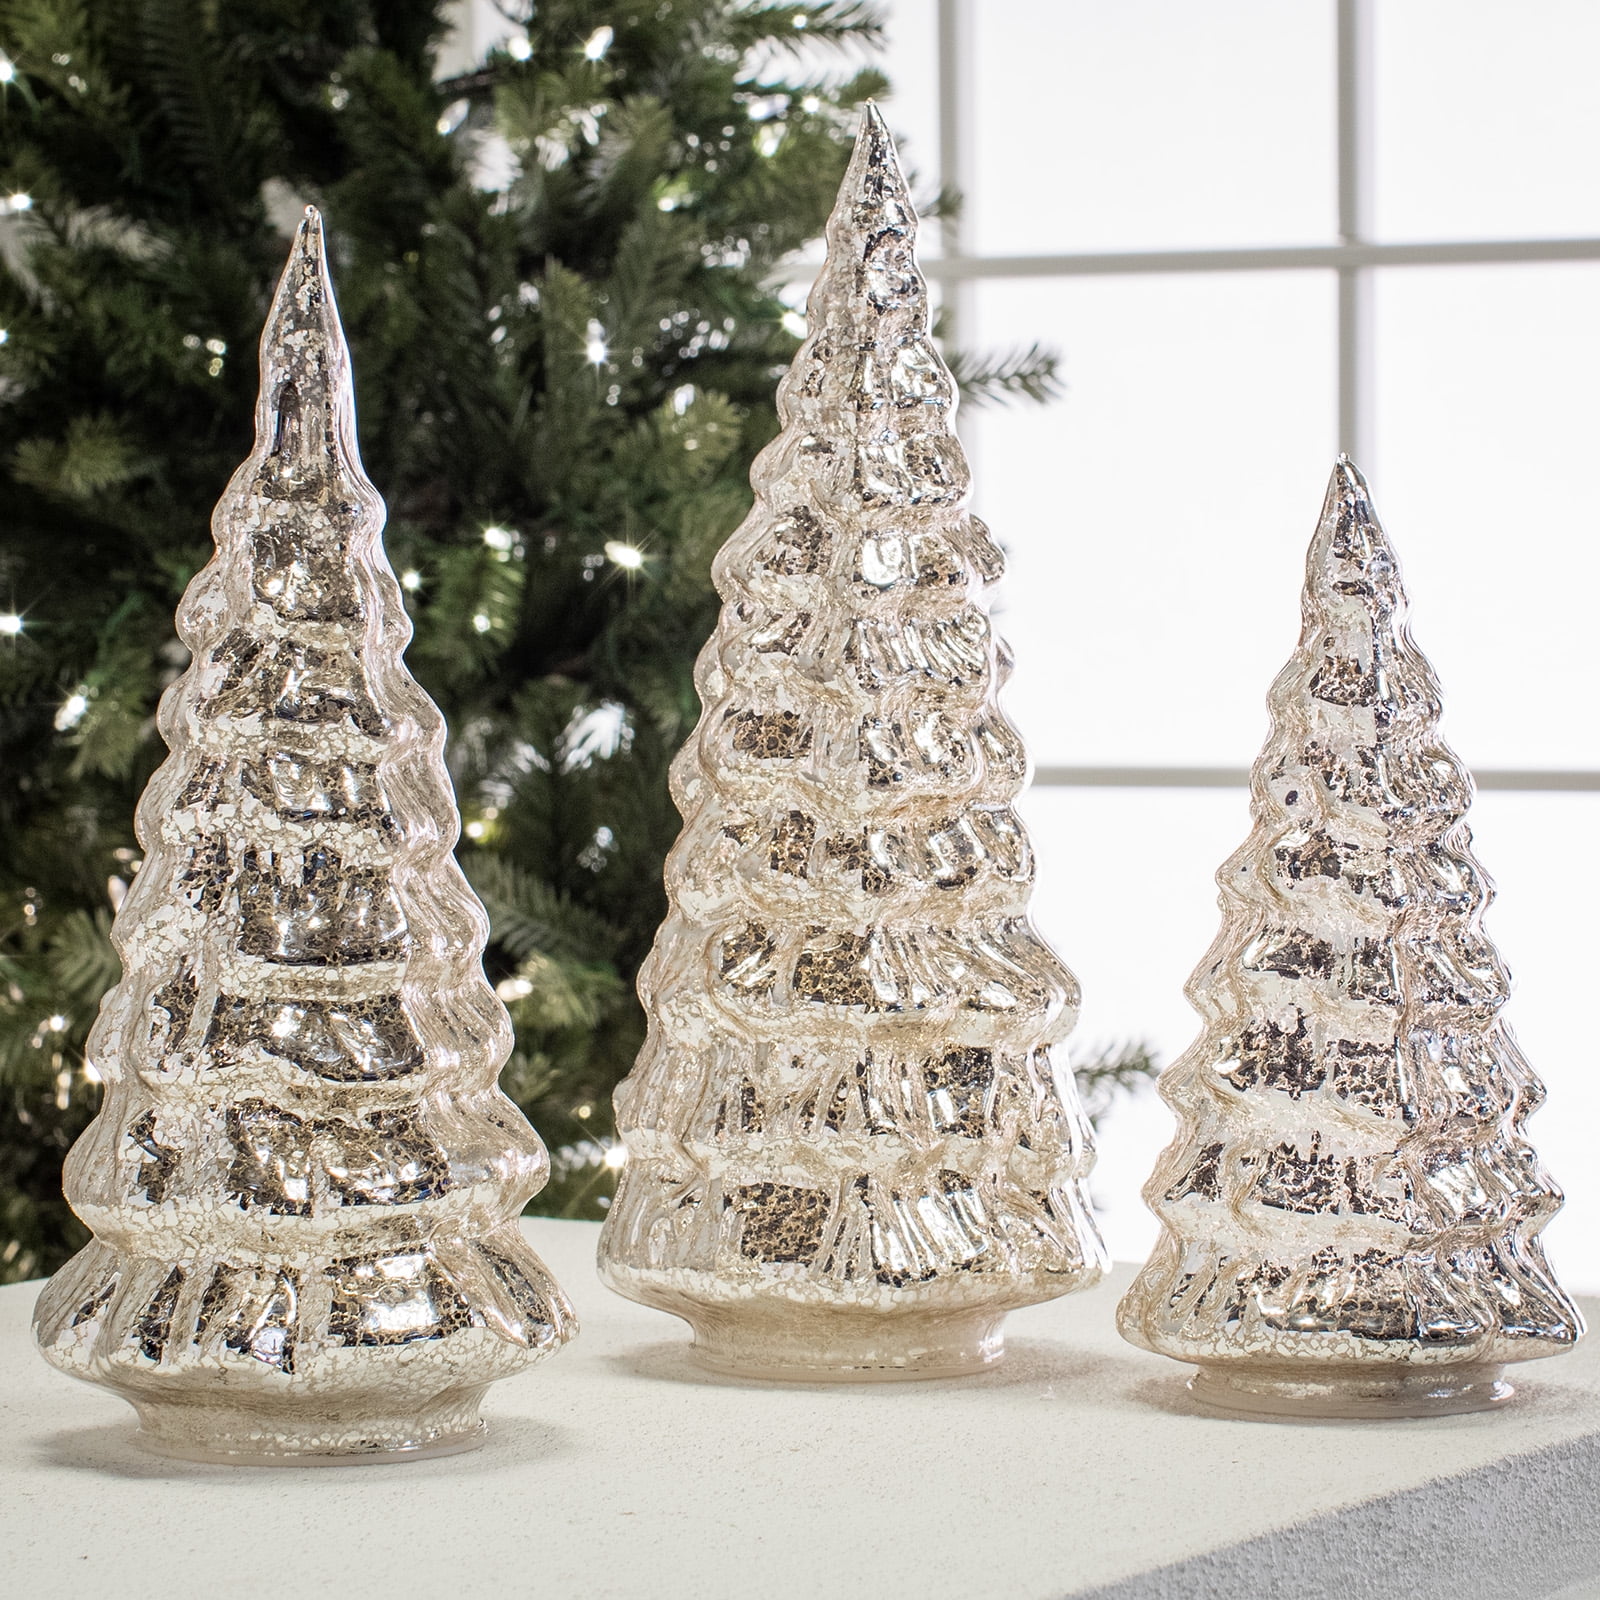 Lighted Mercury Glass Christmas Trees - Haute Decor 14 In Christmas Tree Li...